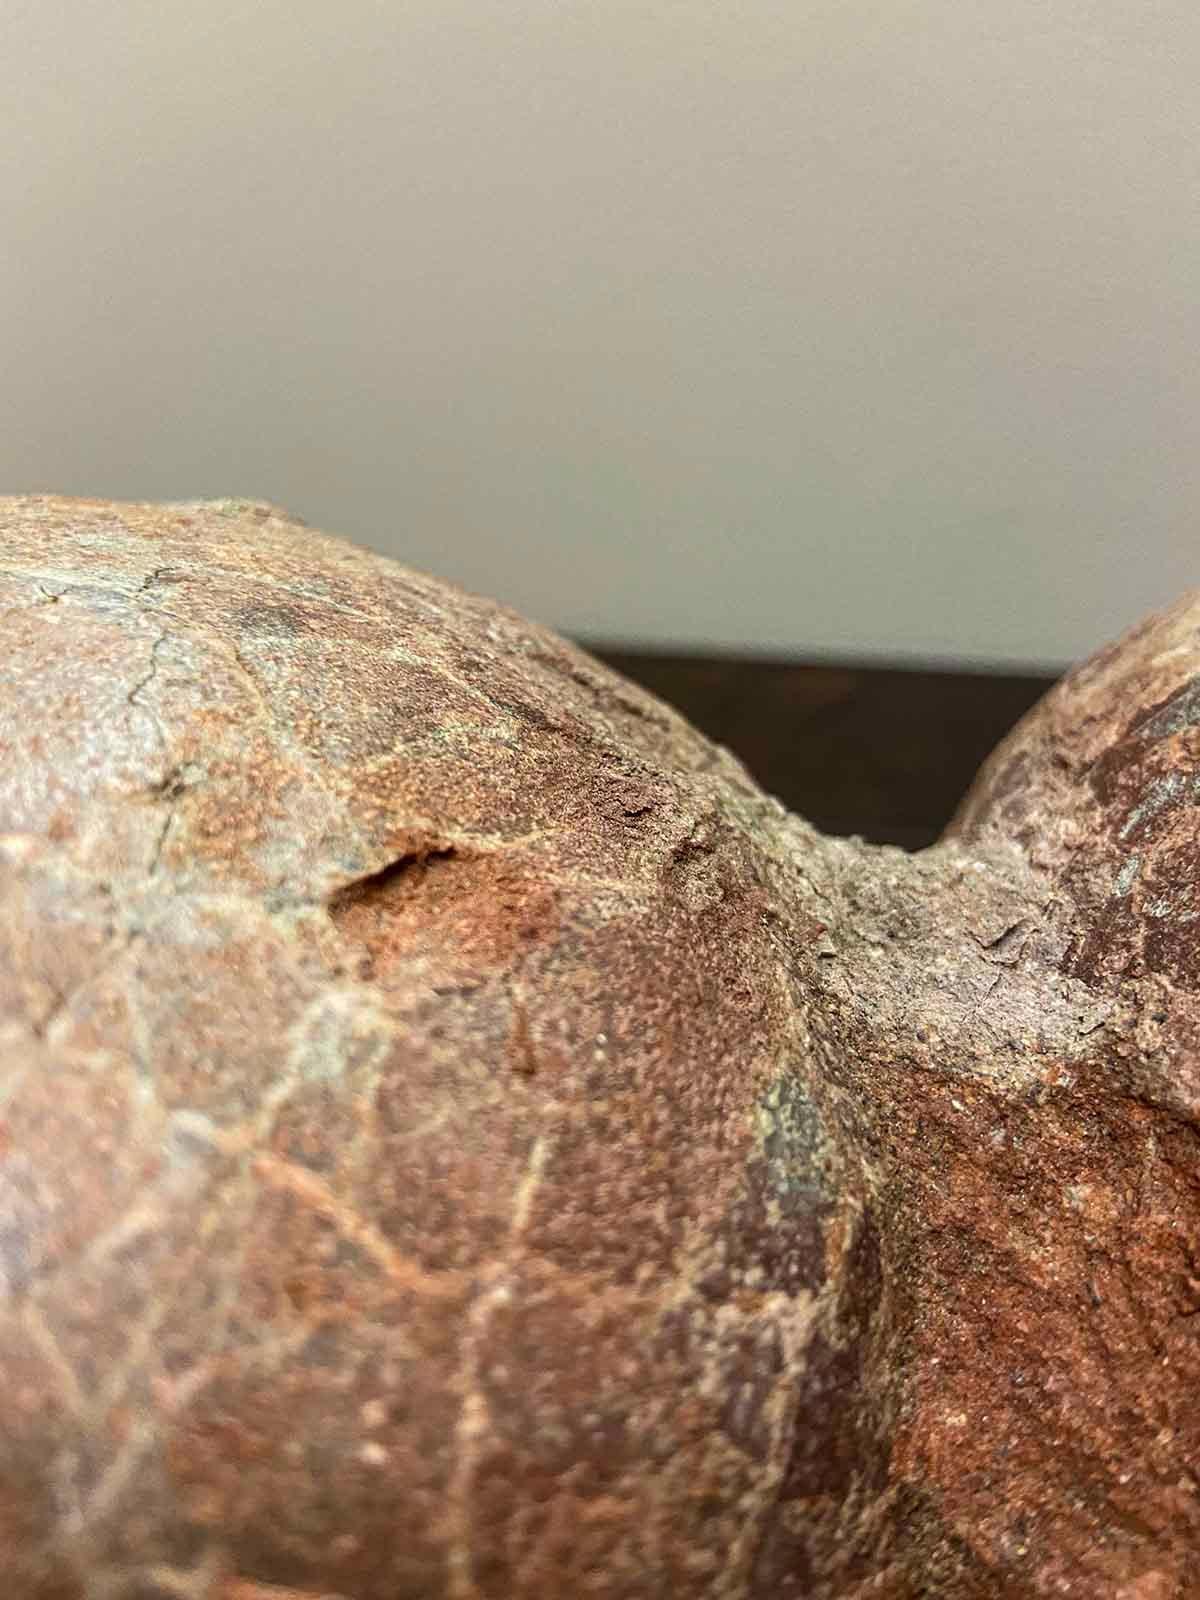 Stone Rare Prehistoric Petrified Dinosaur Egg Nest with Cracked Surface